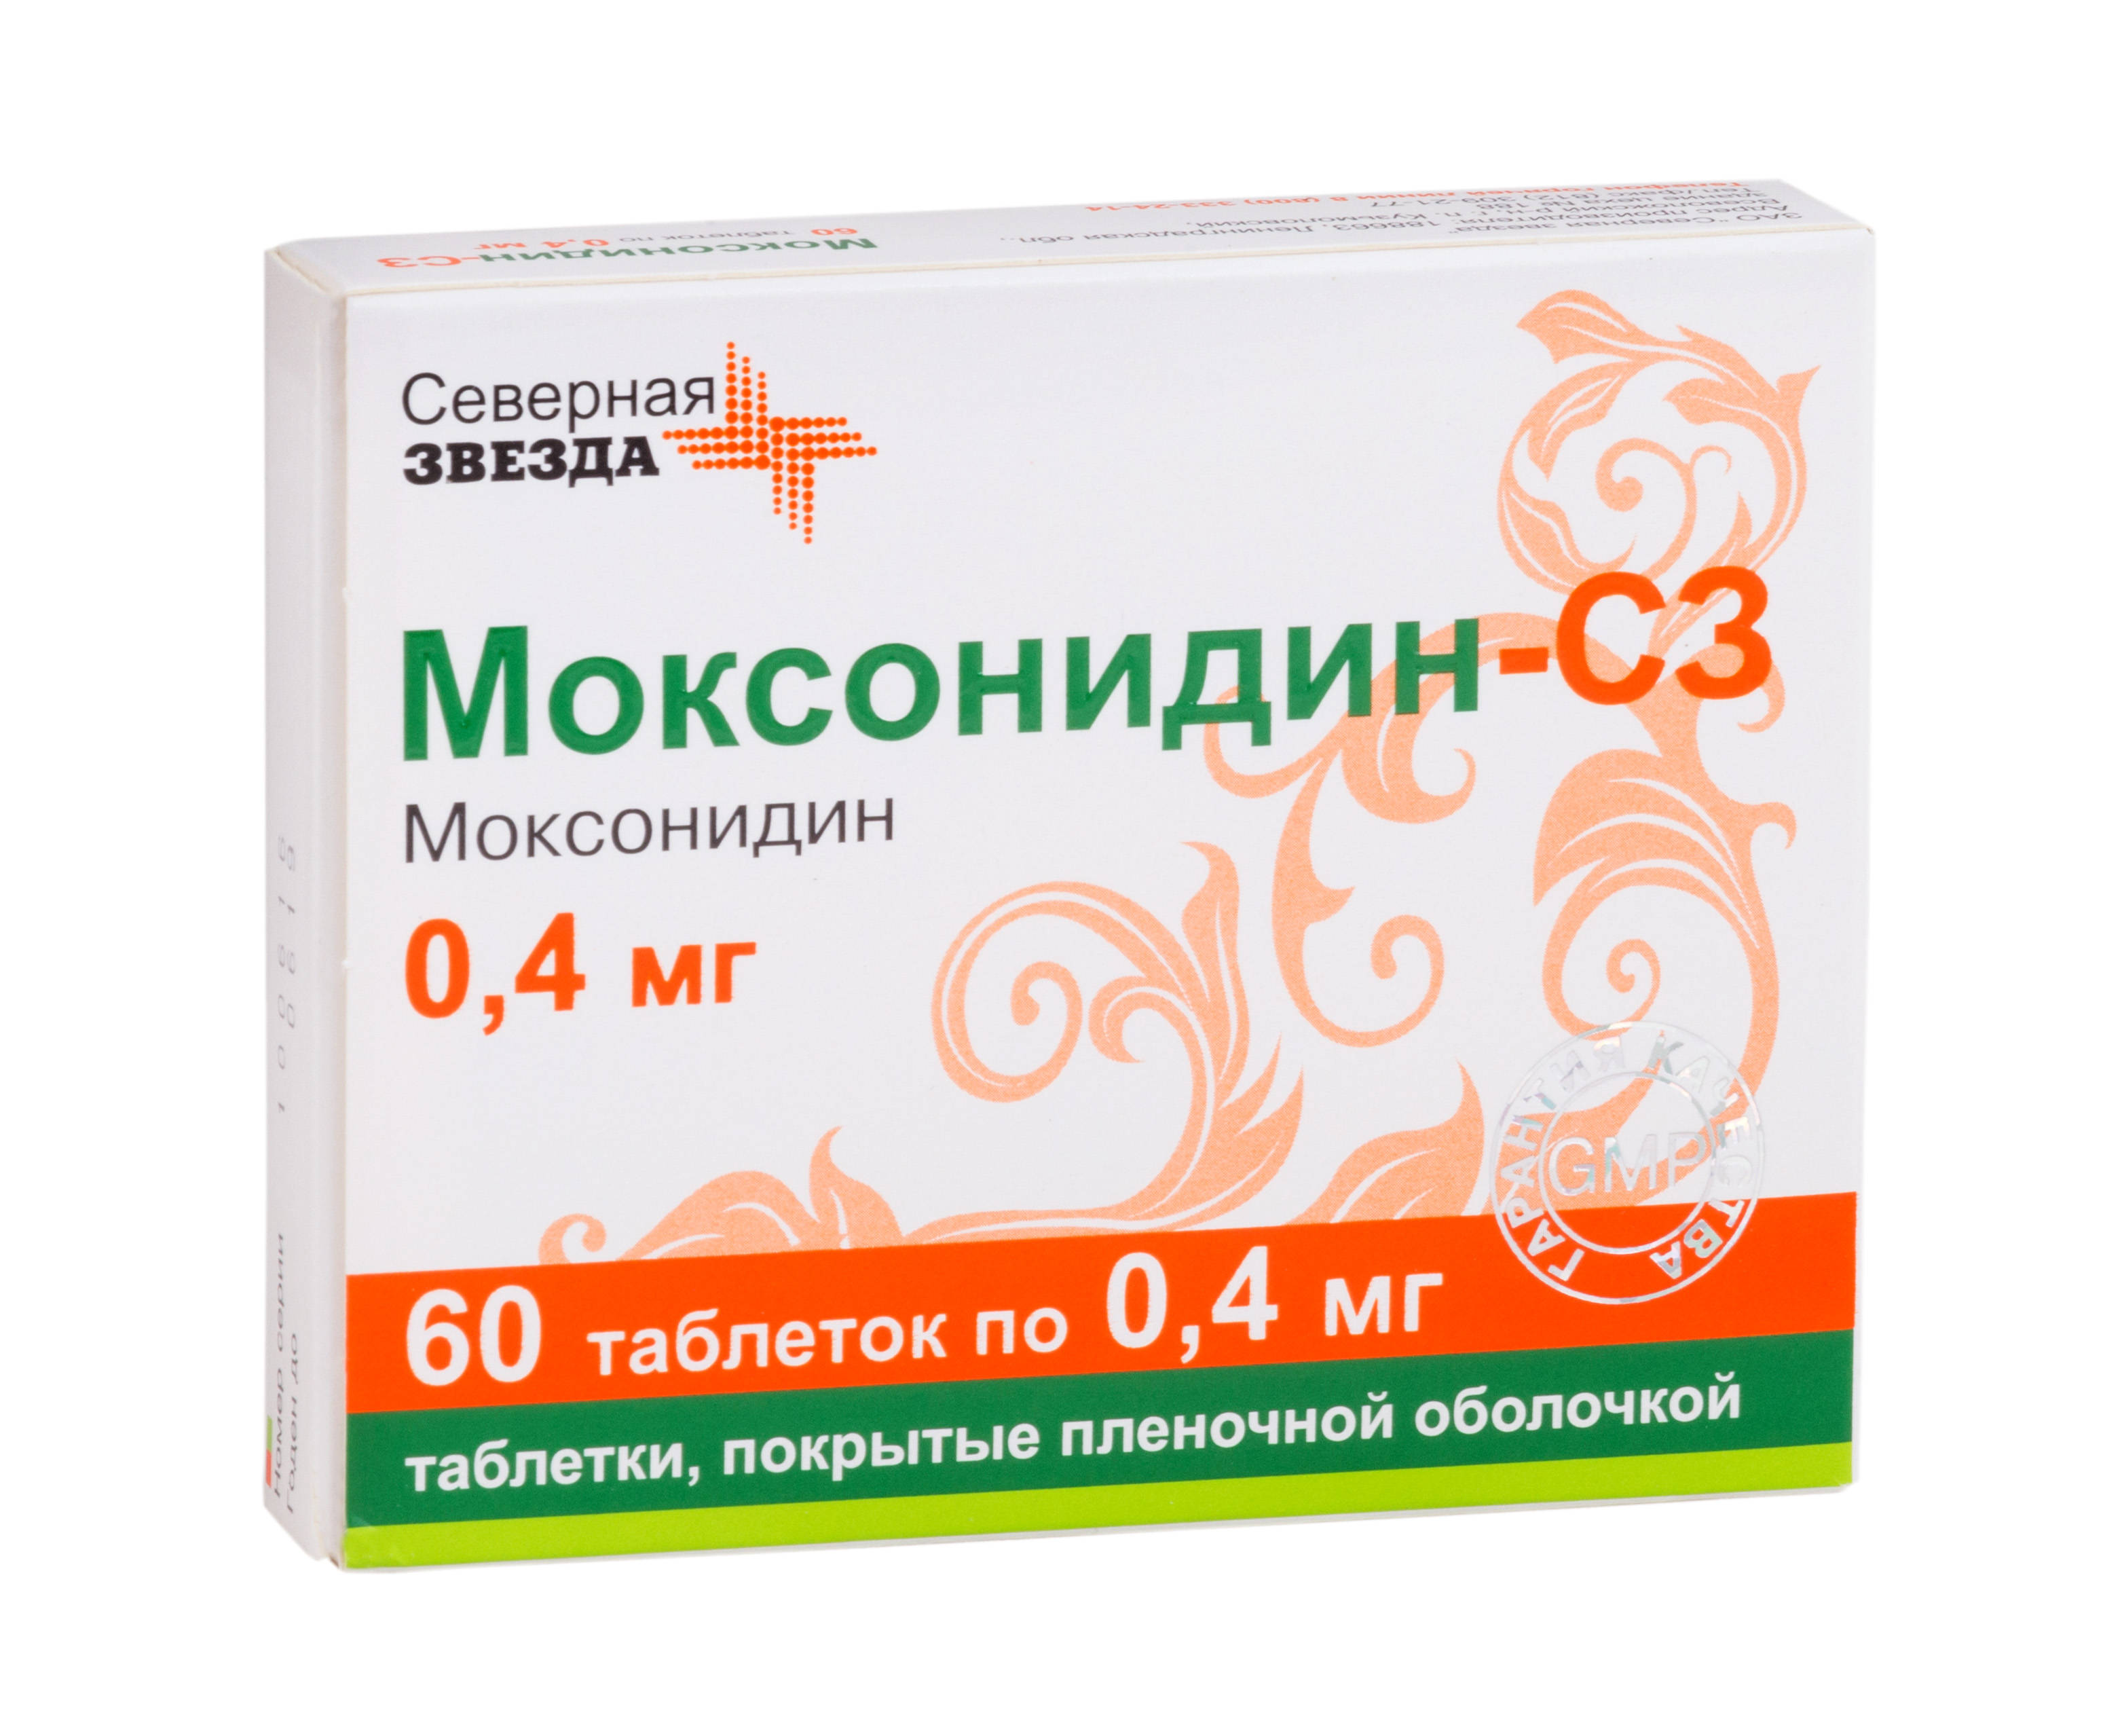 Aptekirls :: Моксонидин-СЗ табл. п.п.о. 0,4 мг №60 — заказать онлайн .